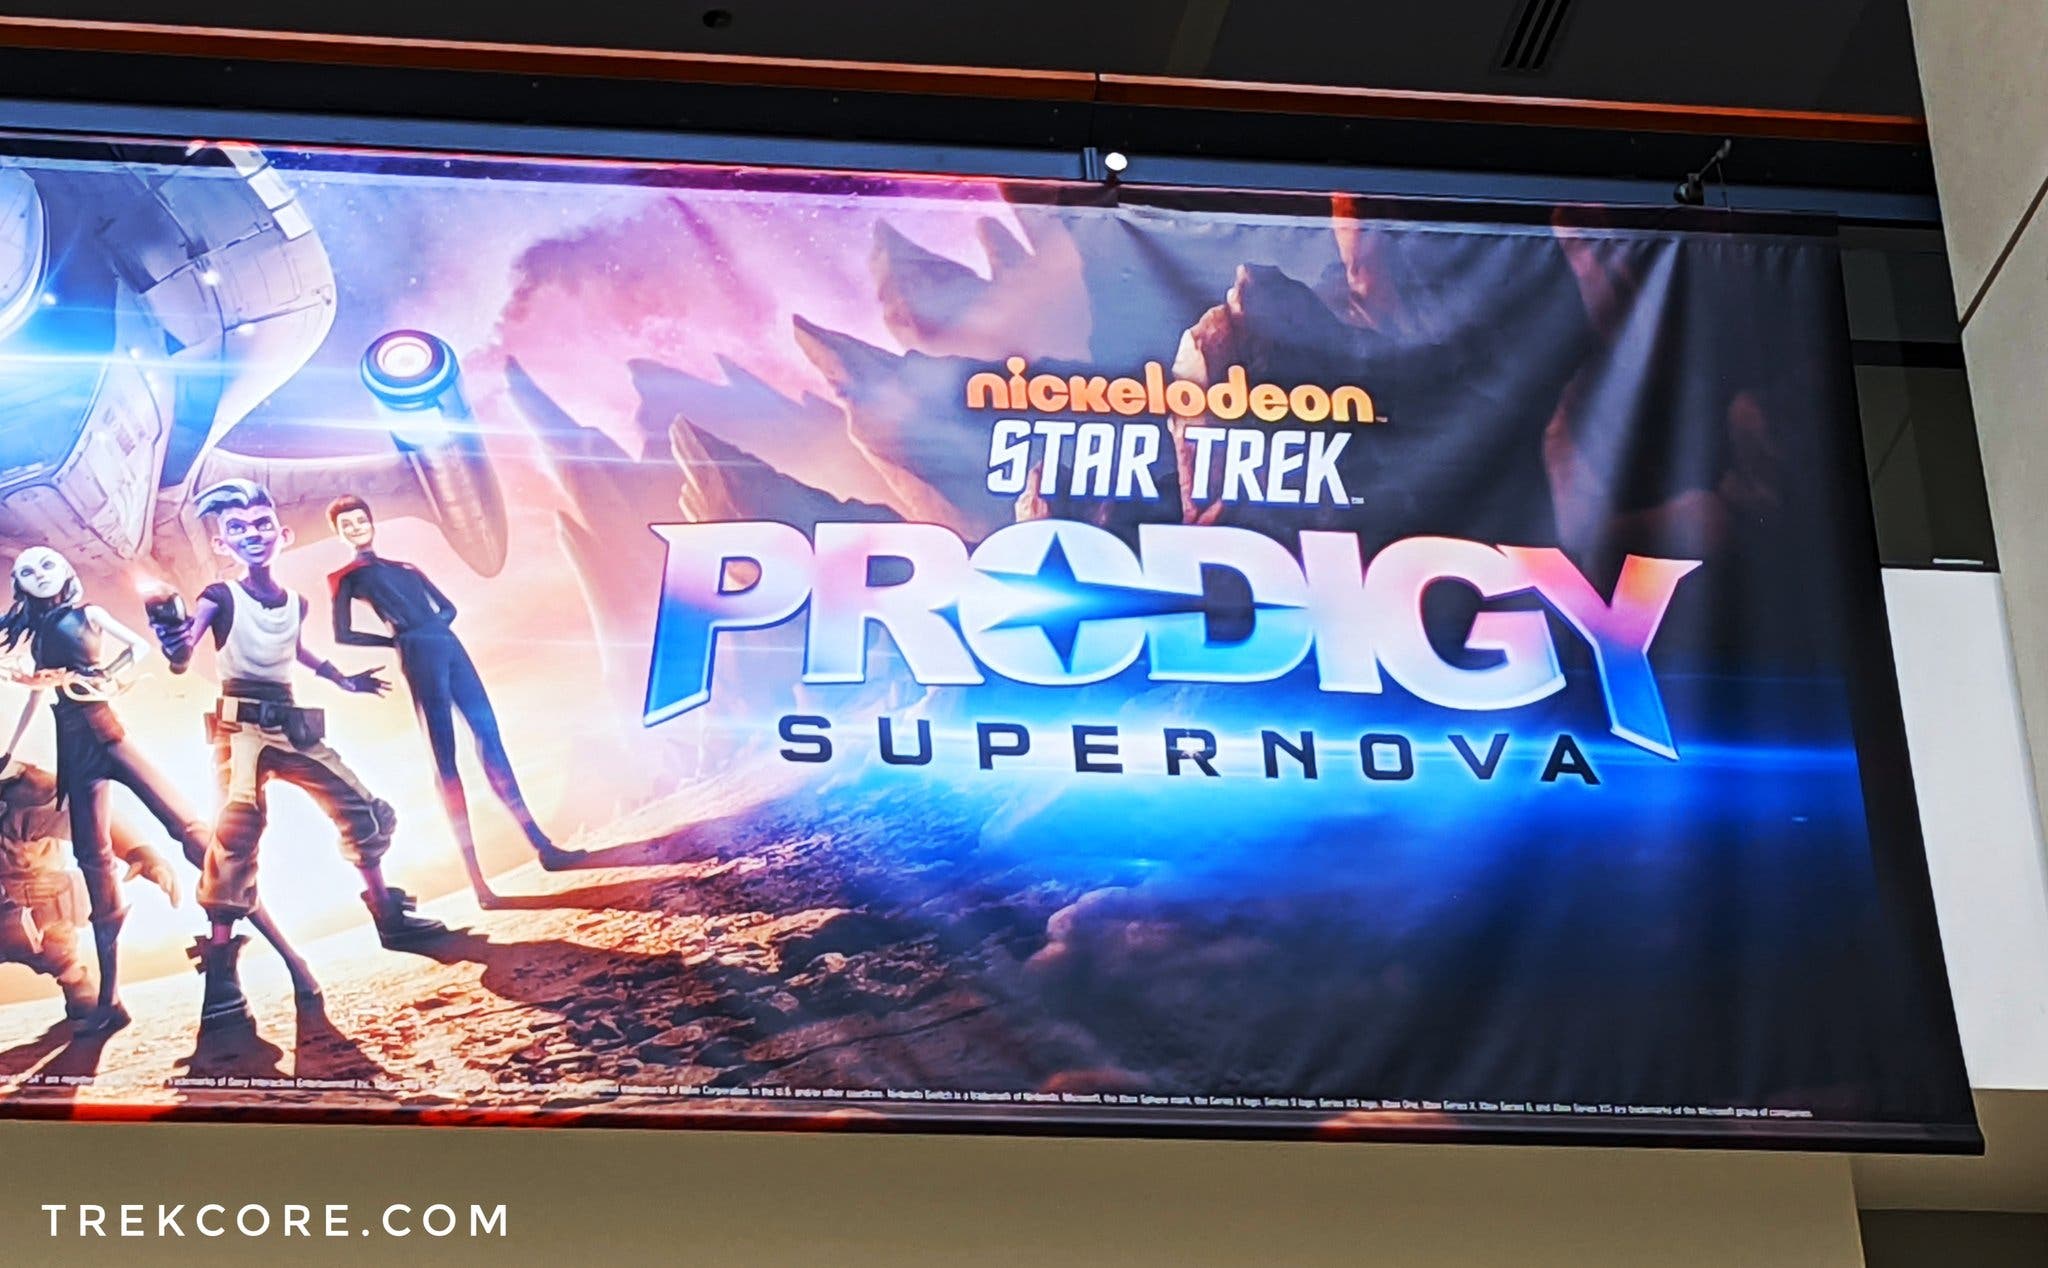 Un nuevo juego de Star Trek llegará a Nintendo Switch: Star Trek: Prodigy – Supernova